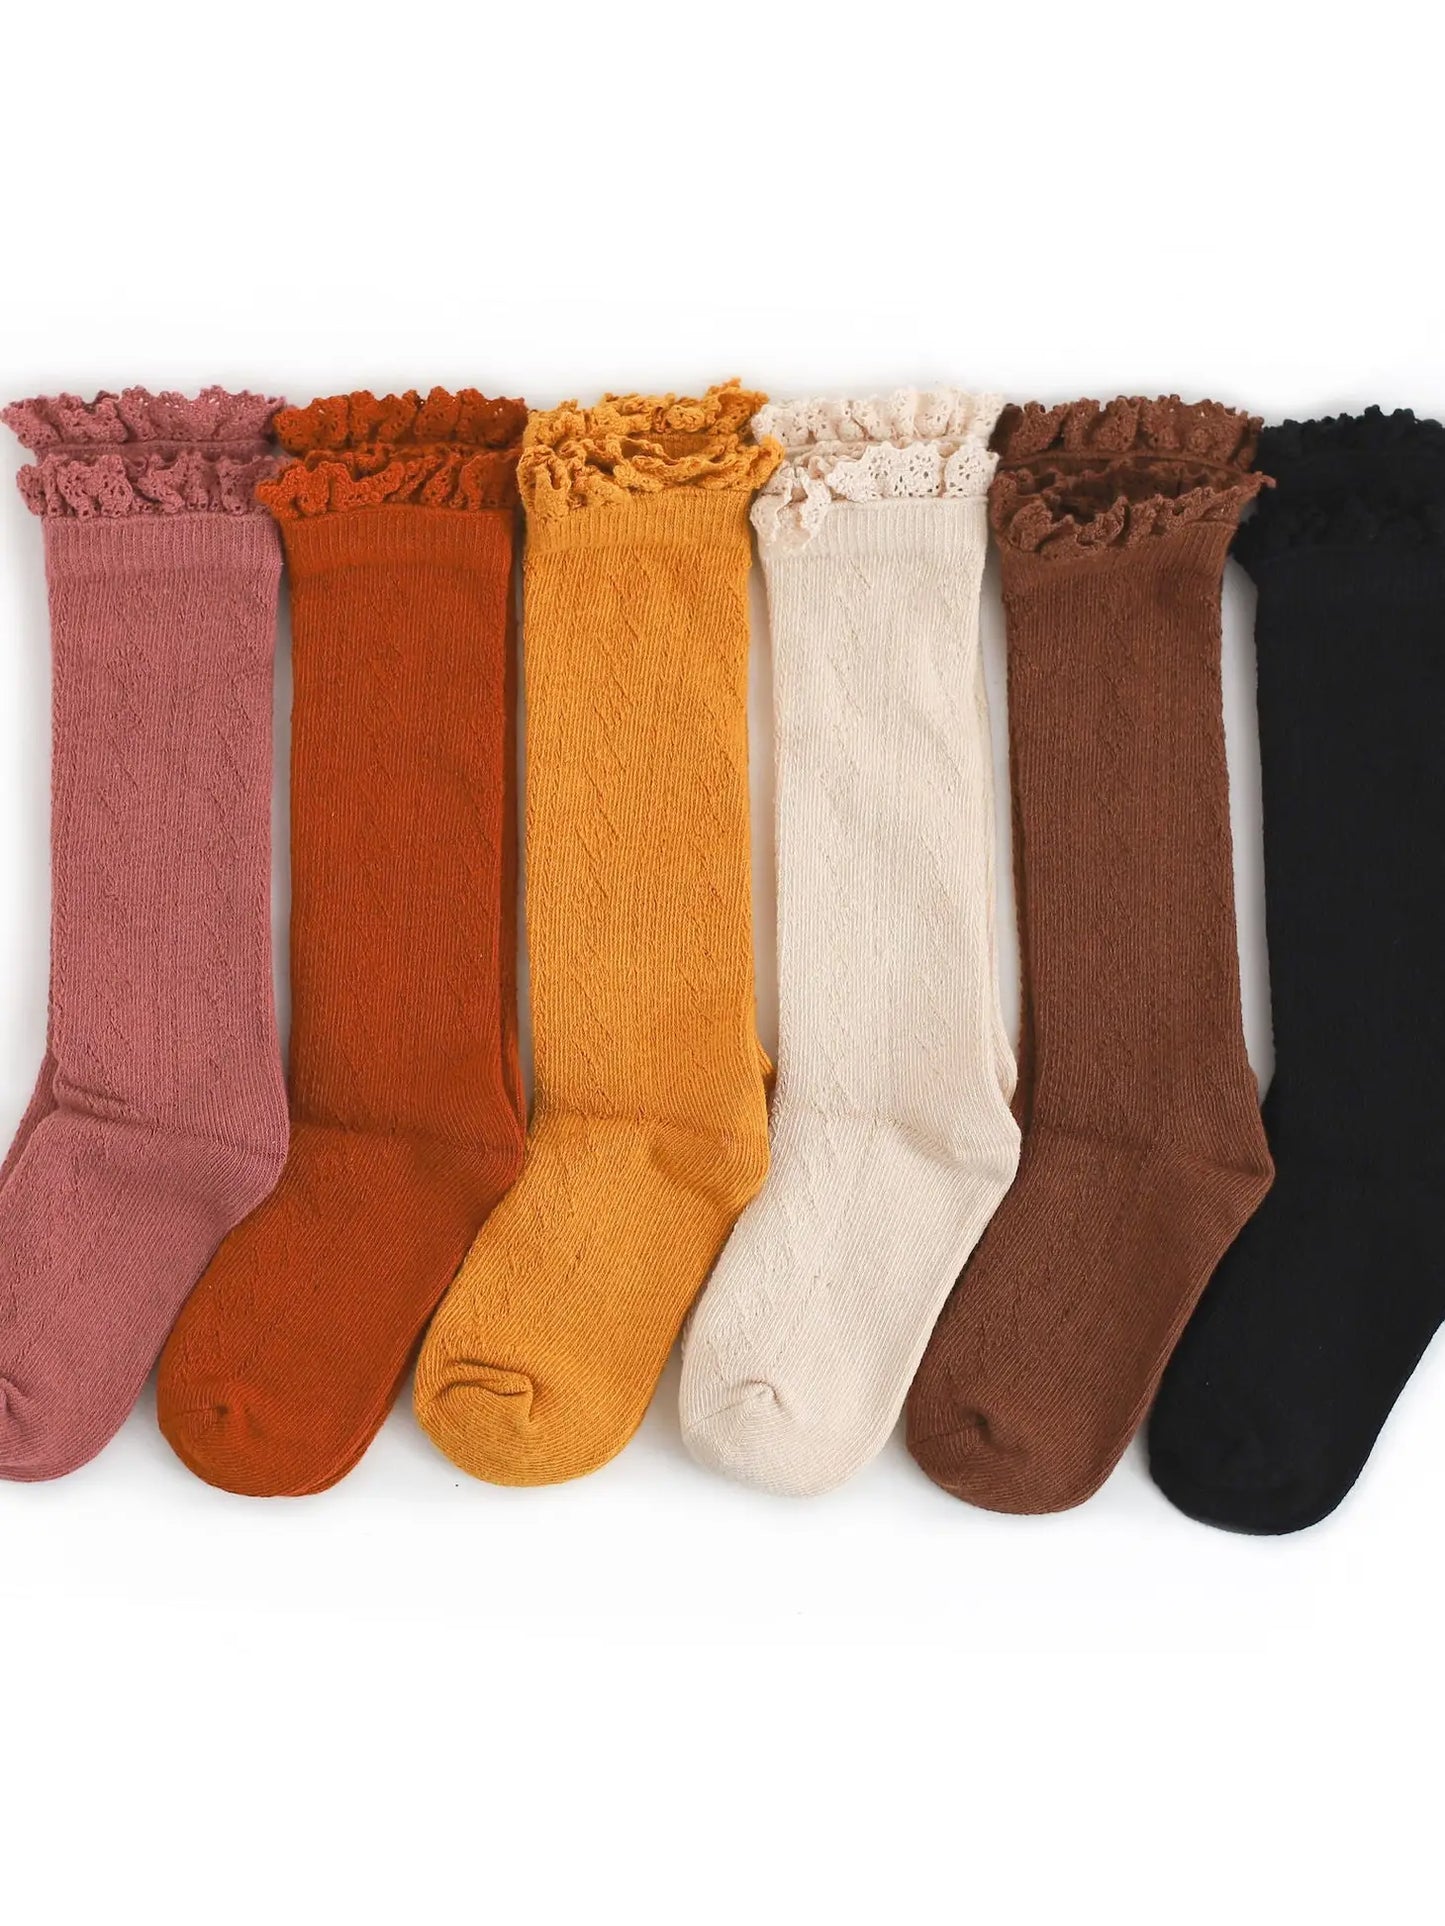 Little Stocking Co. - Fall Fancy  Lace Top Knee High Socks